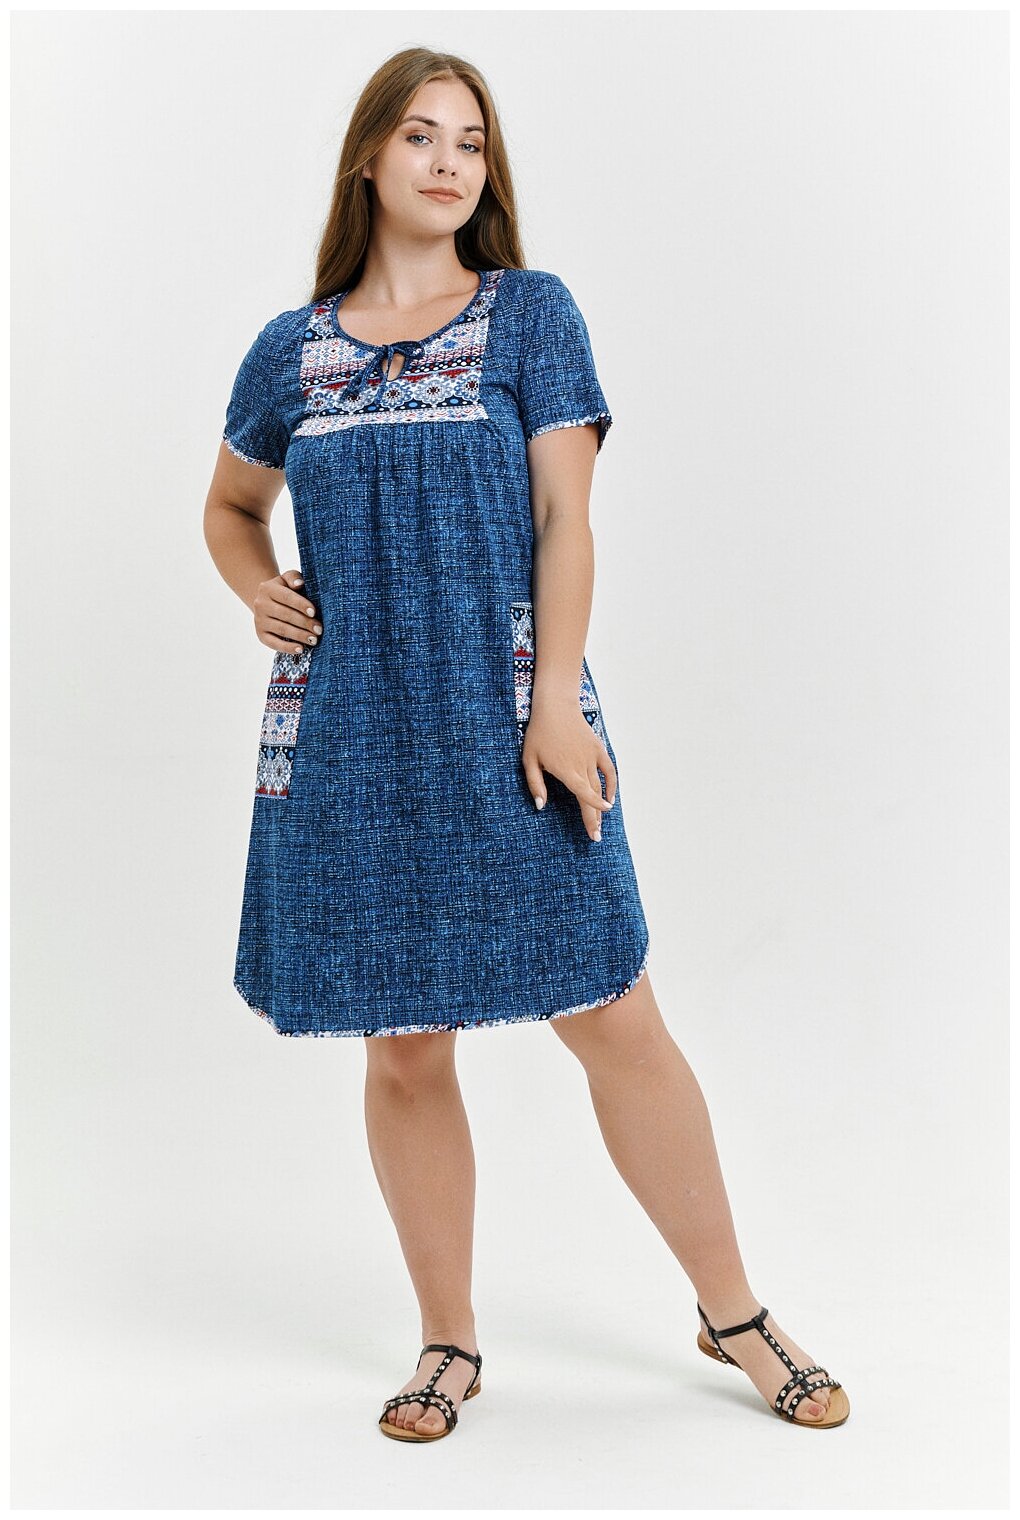 Туника Натали, короткий рукав, карманы, размер 60, синий - фотография № 15